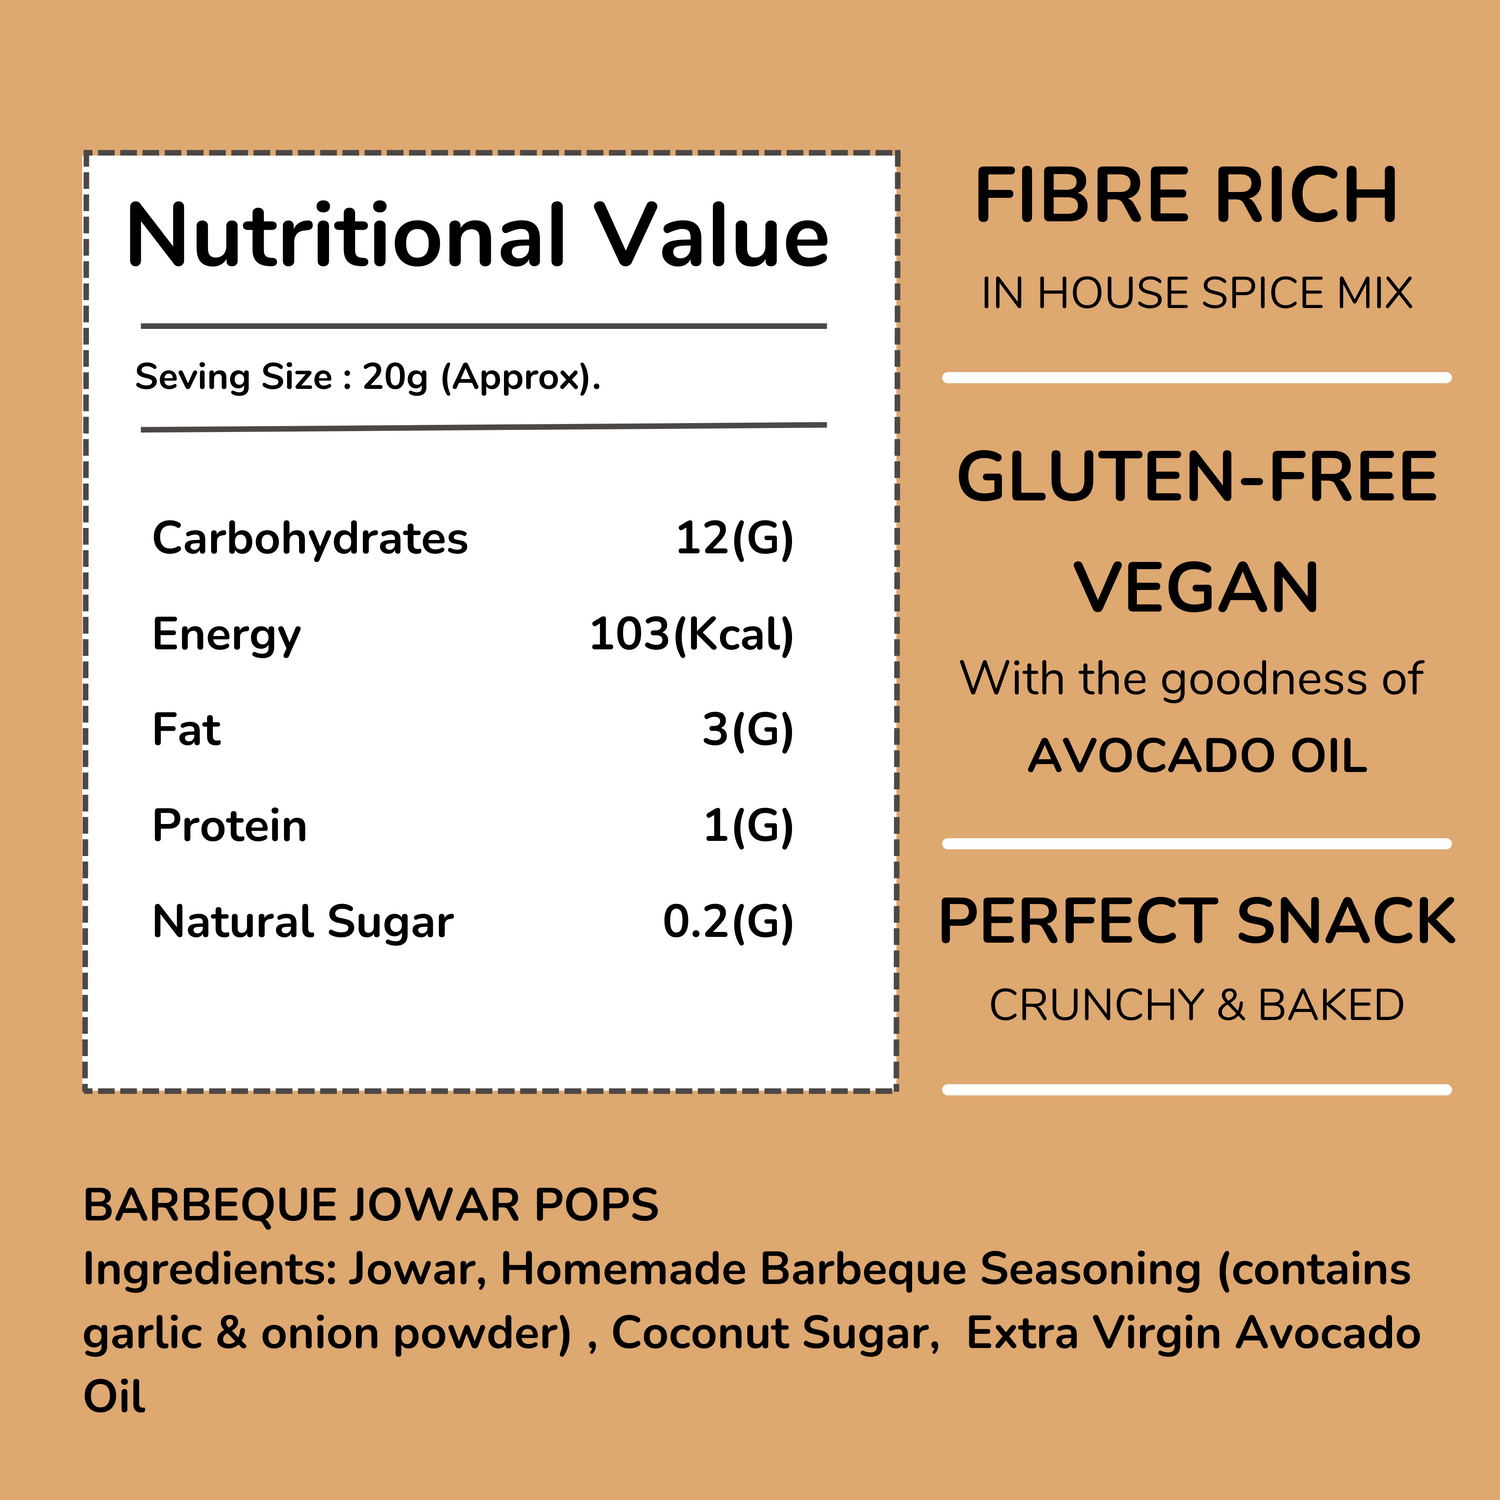 Barbeque Jowar Pops Nutritional Value info